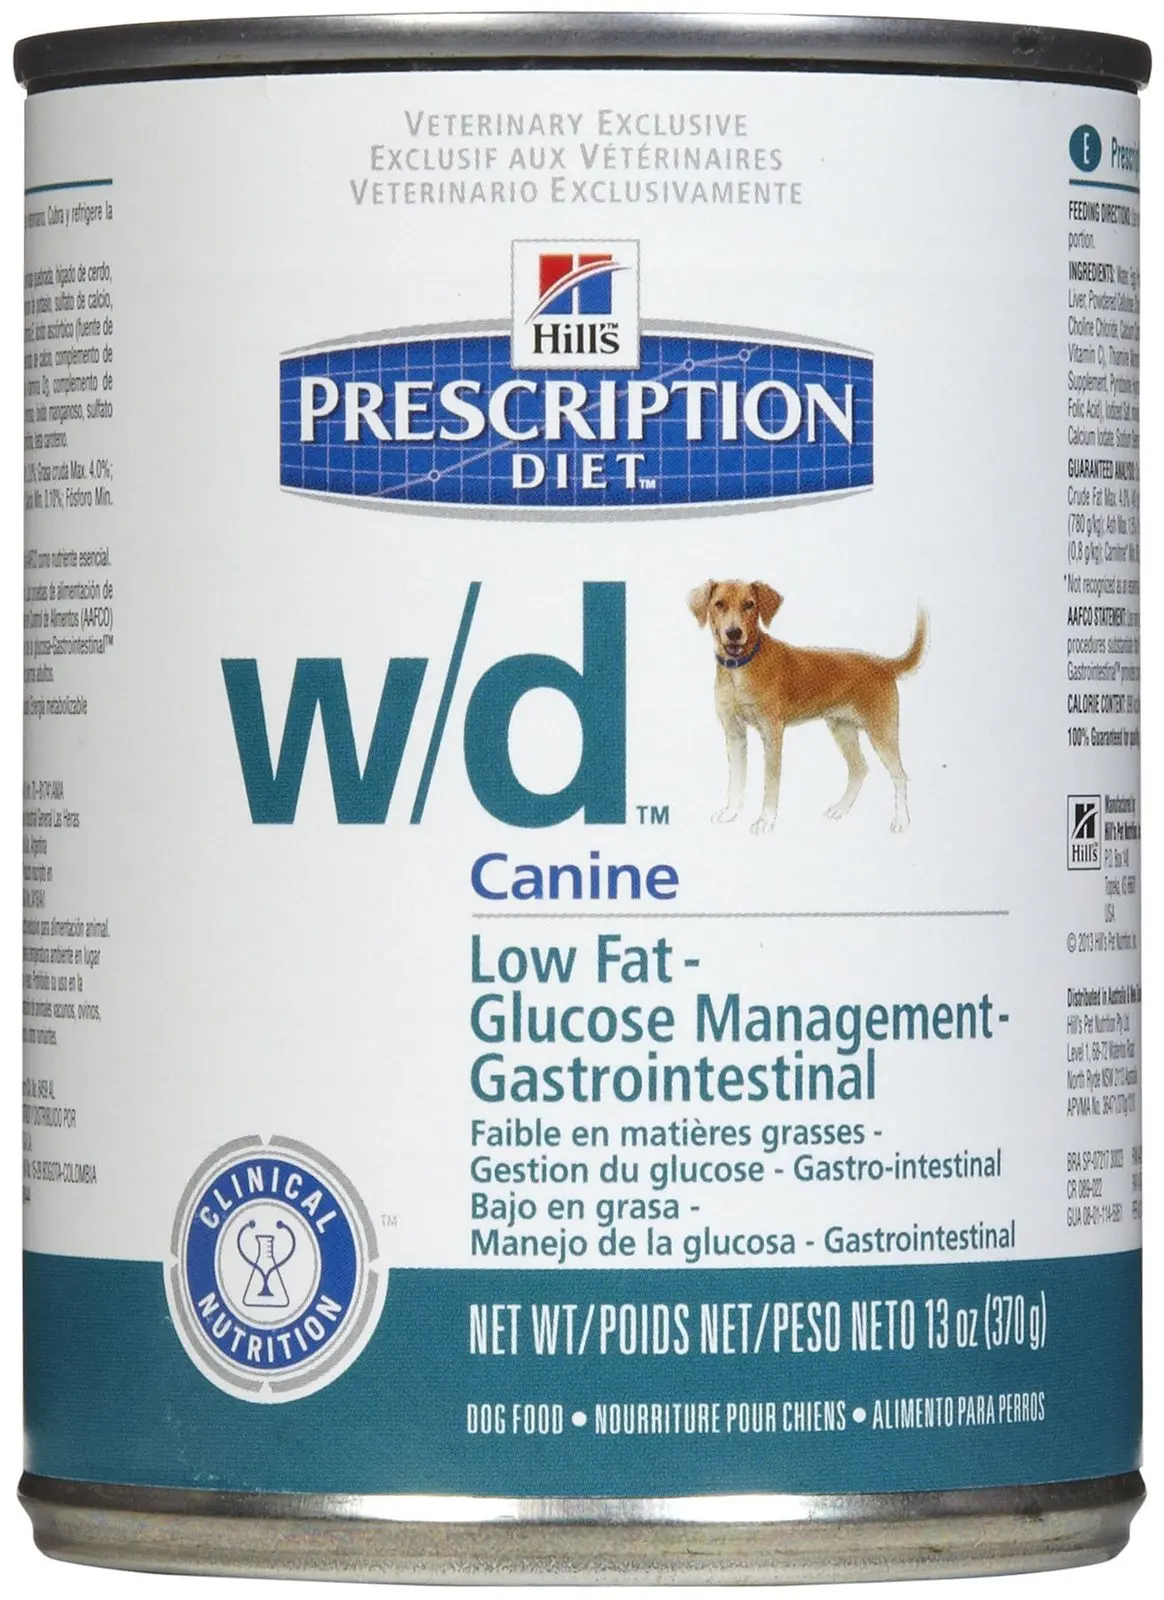 hills digestive weight glucose management dog food